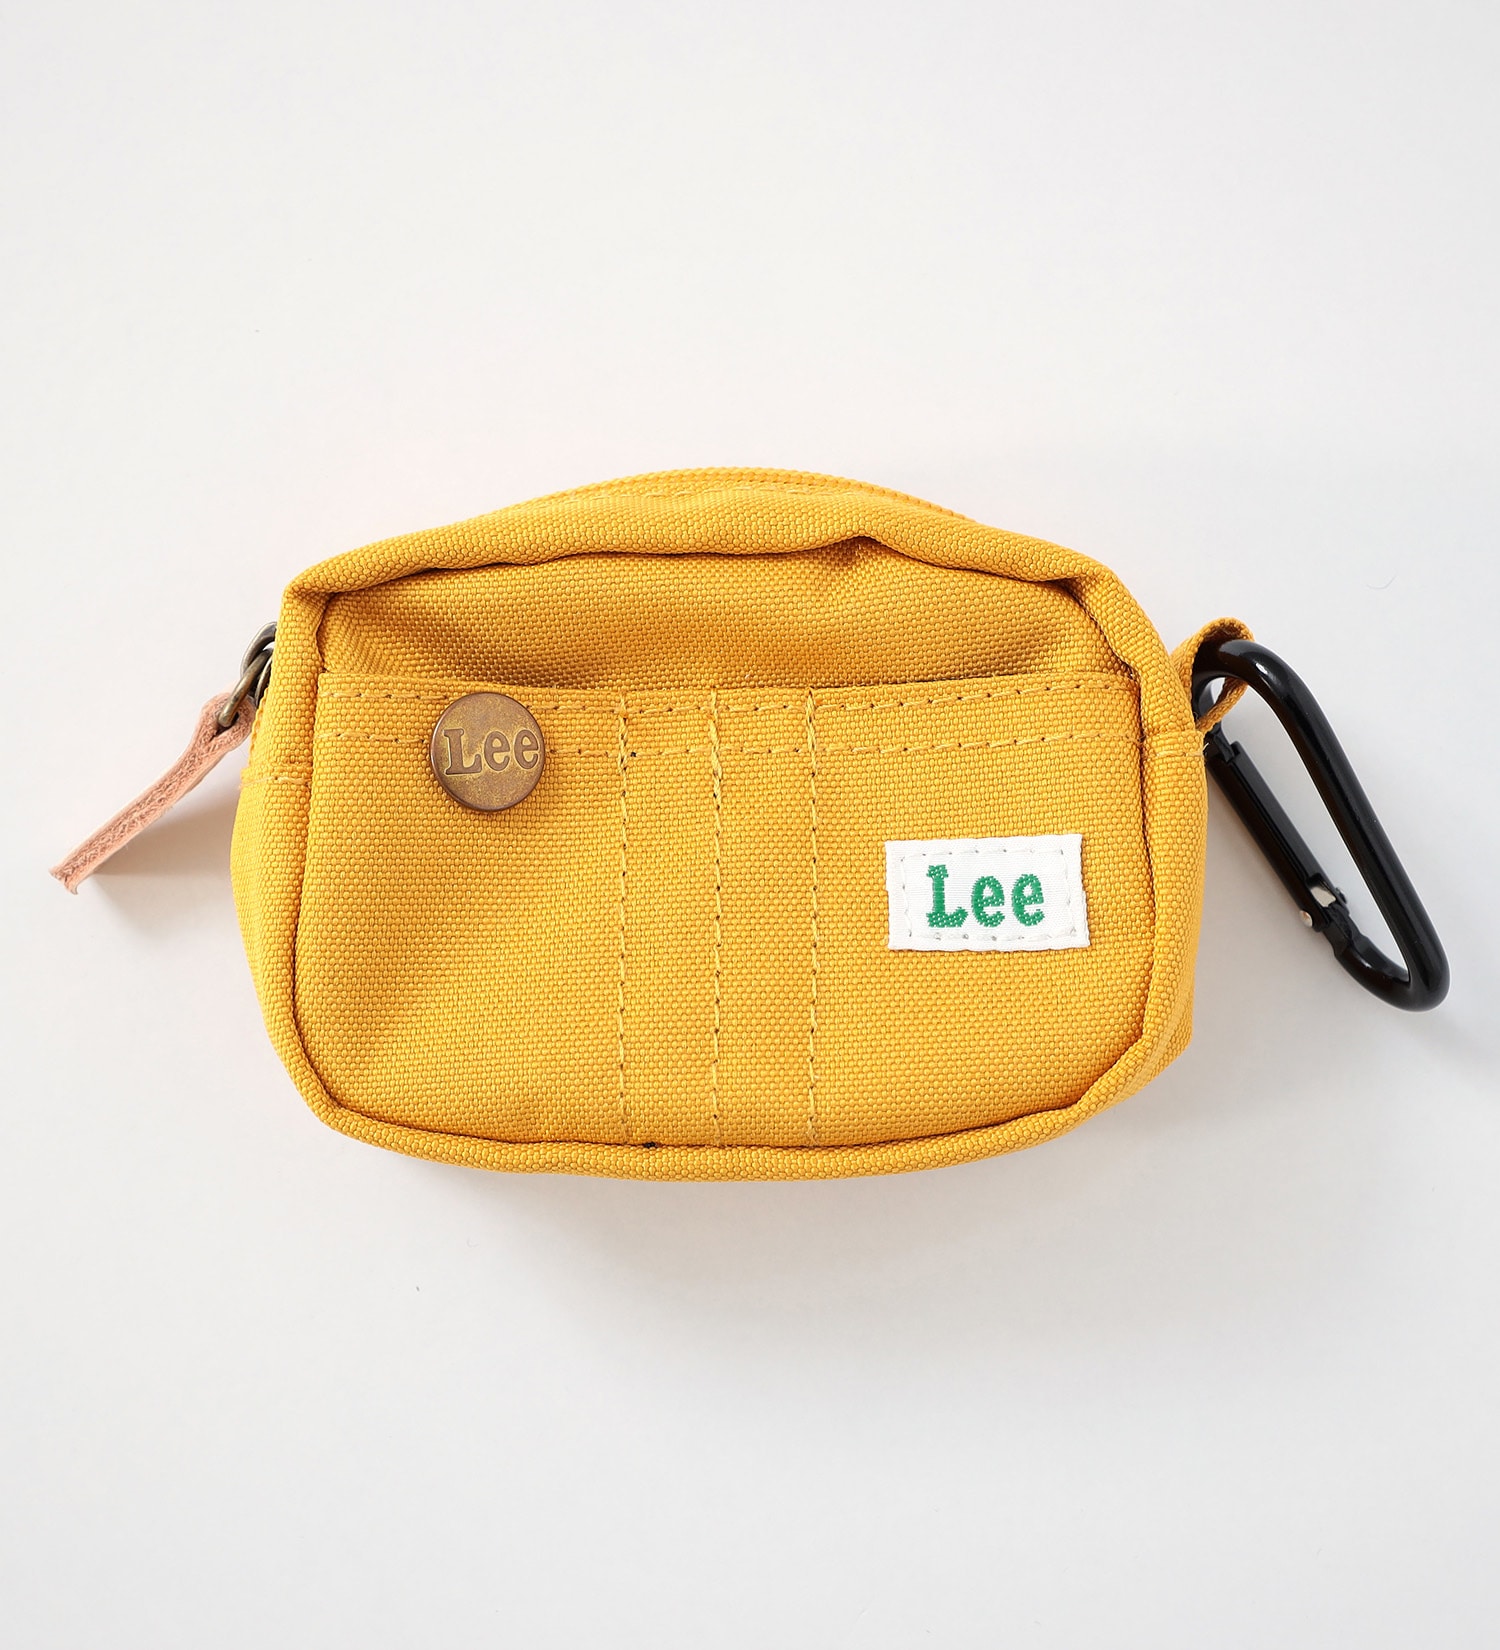 Lee(リー)の【Lee GOLF】ゴルフボールポーチ|ファッション雑貨/ポーチ/メンズ|イエロー